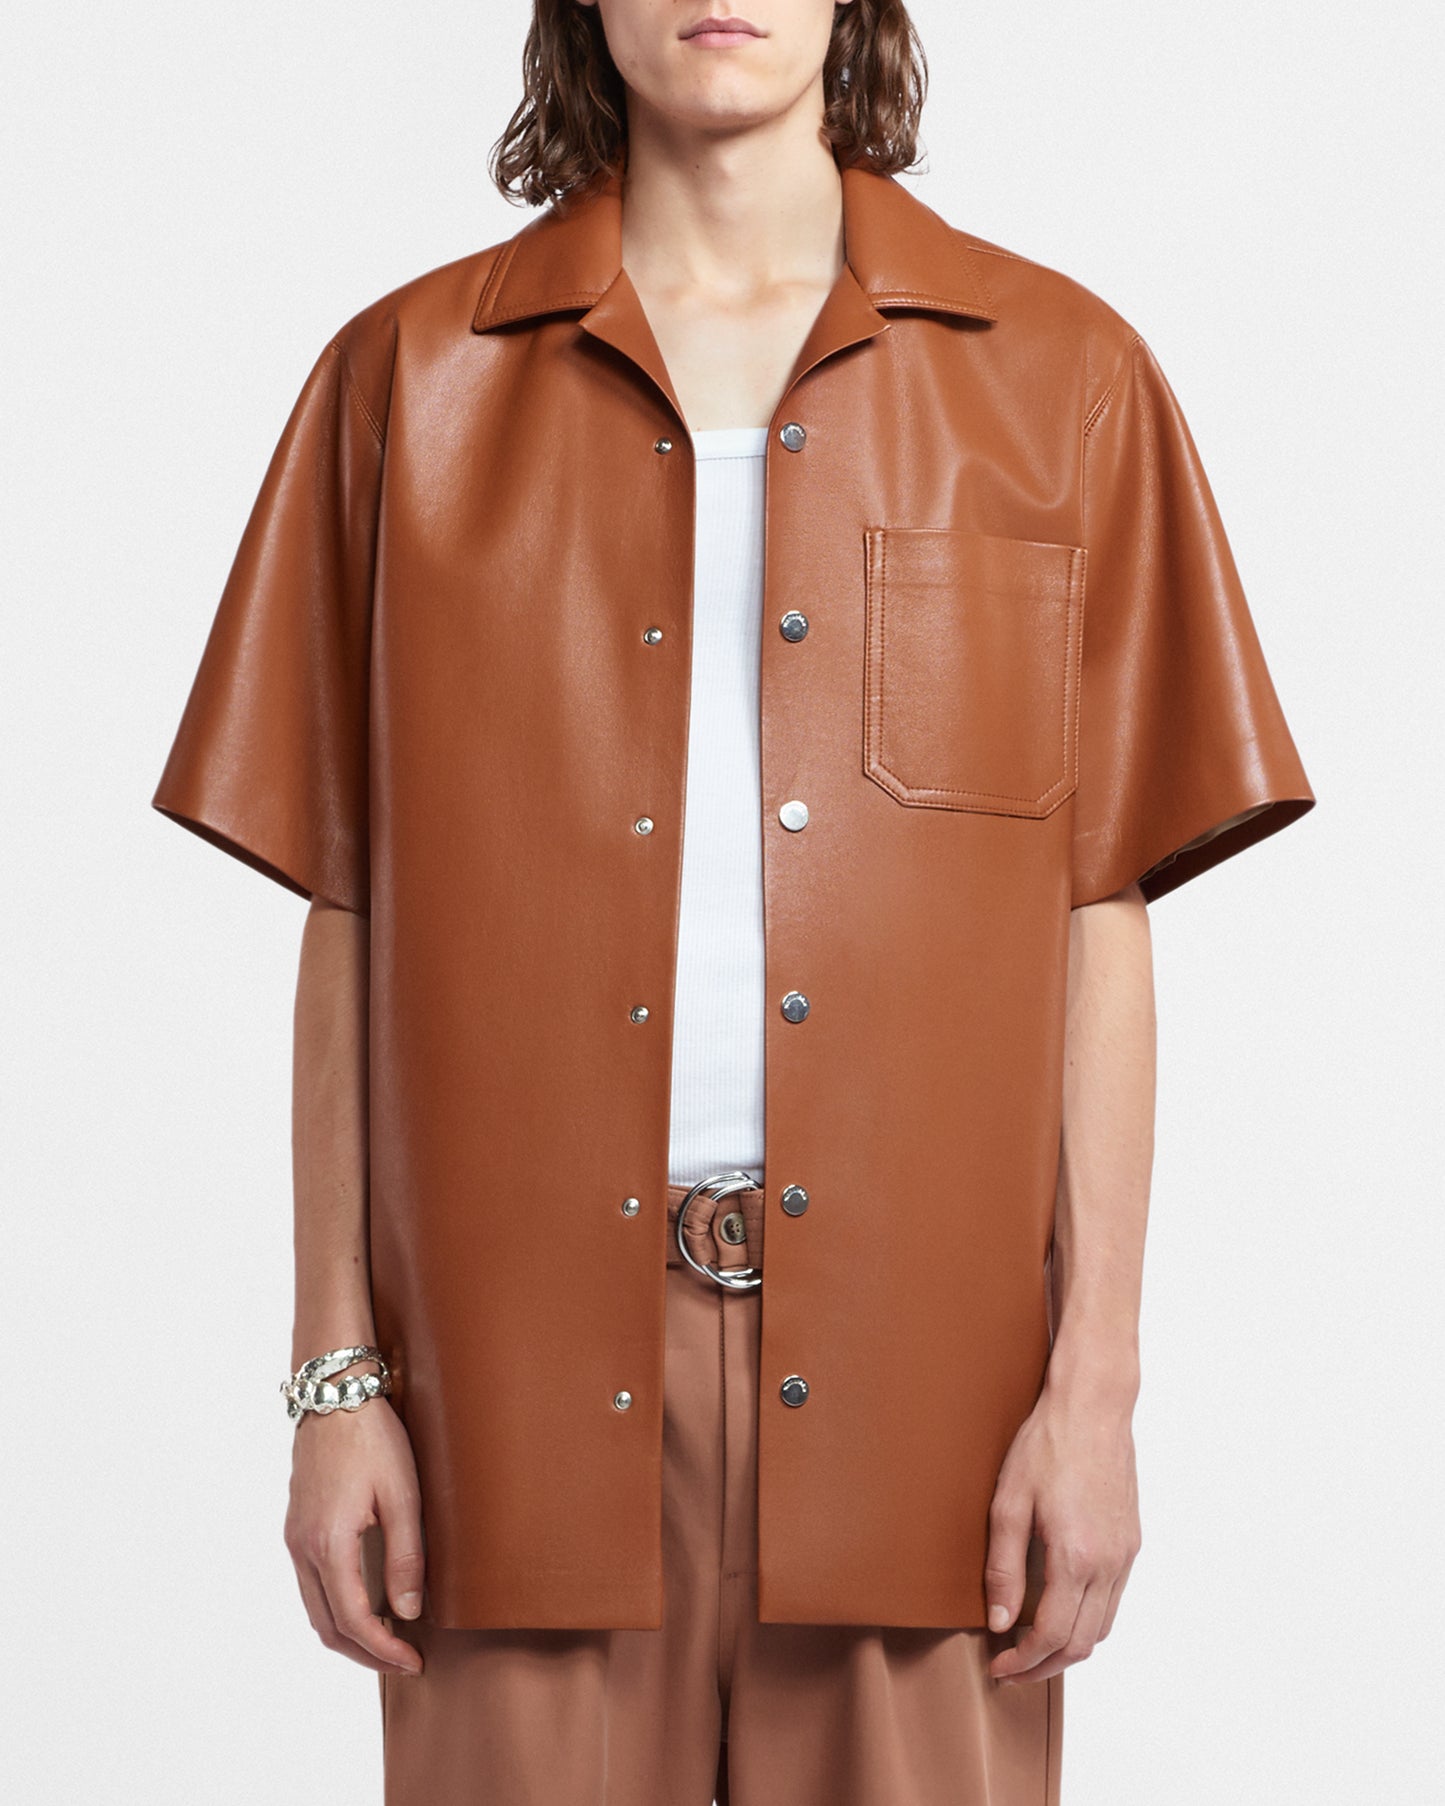 Carrick - Regenerated Leather Shirt - Tan